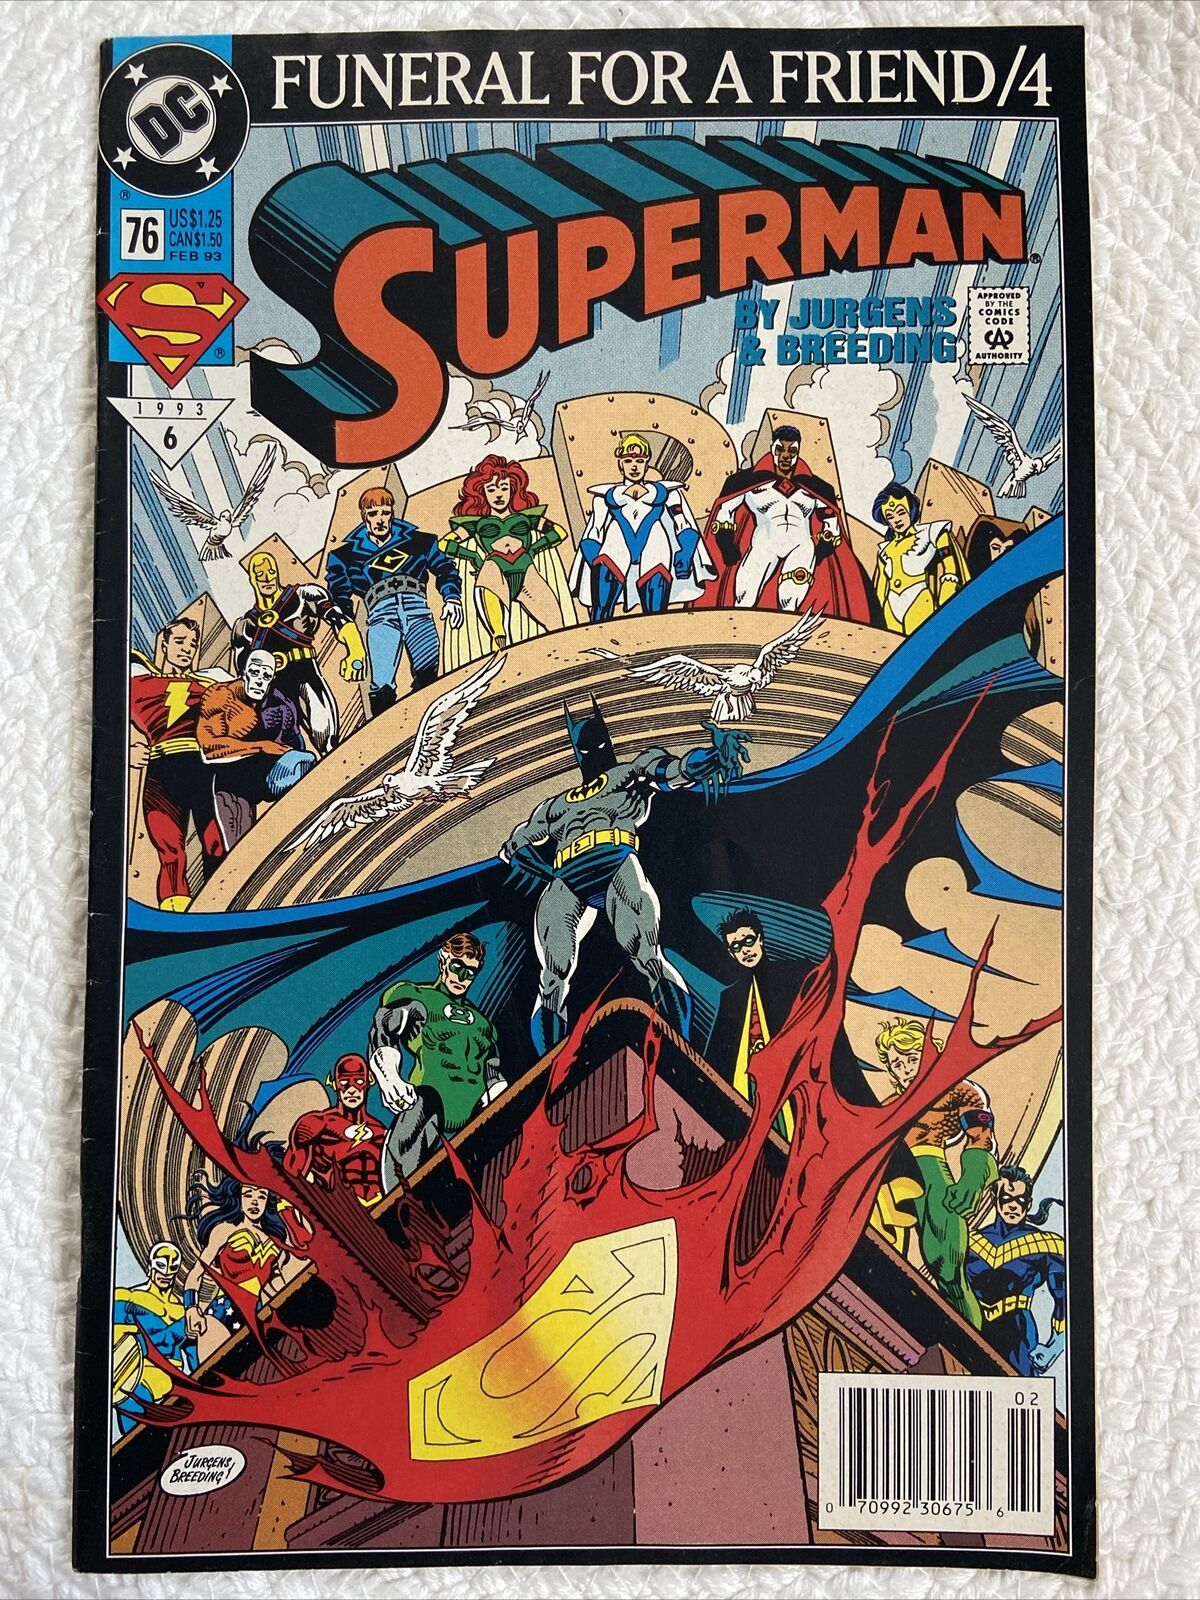 Superman #76 DC Comics 1993 #6 -Funeral For A Friend /4 By Jurgens & Breeding